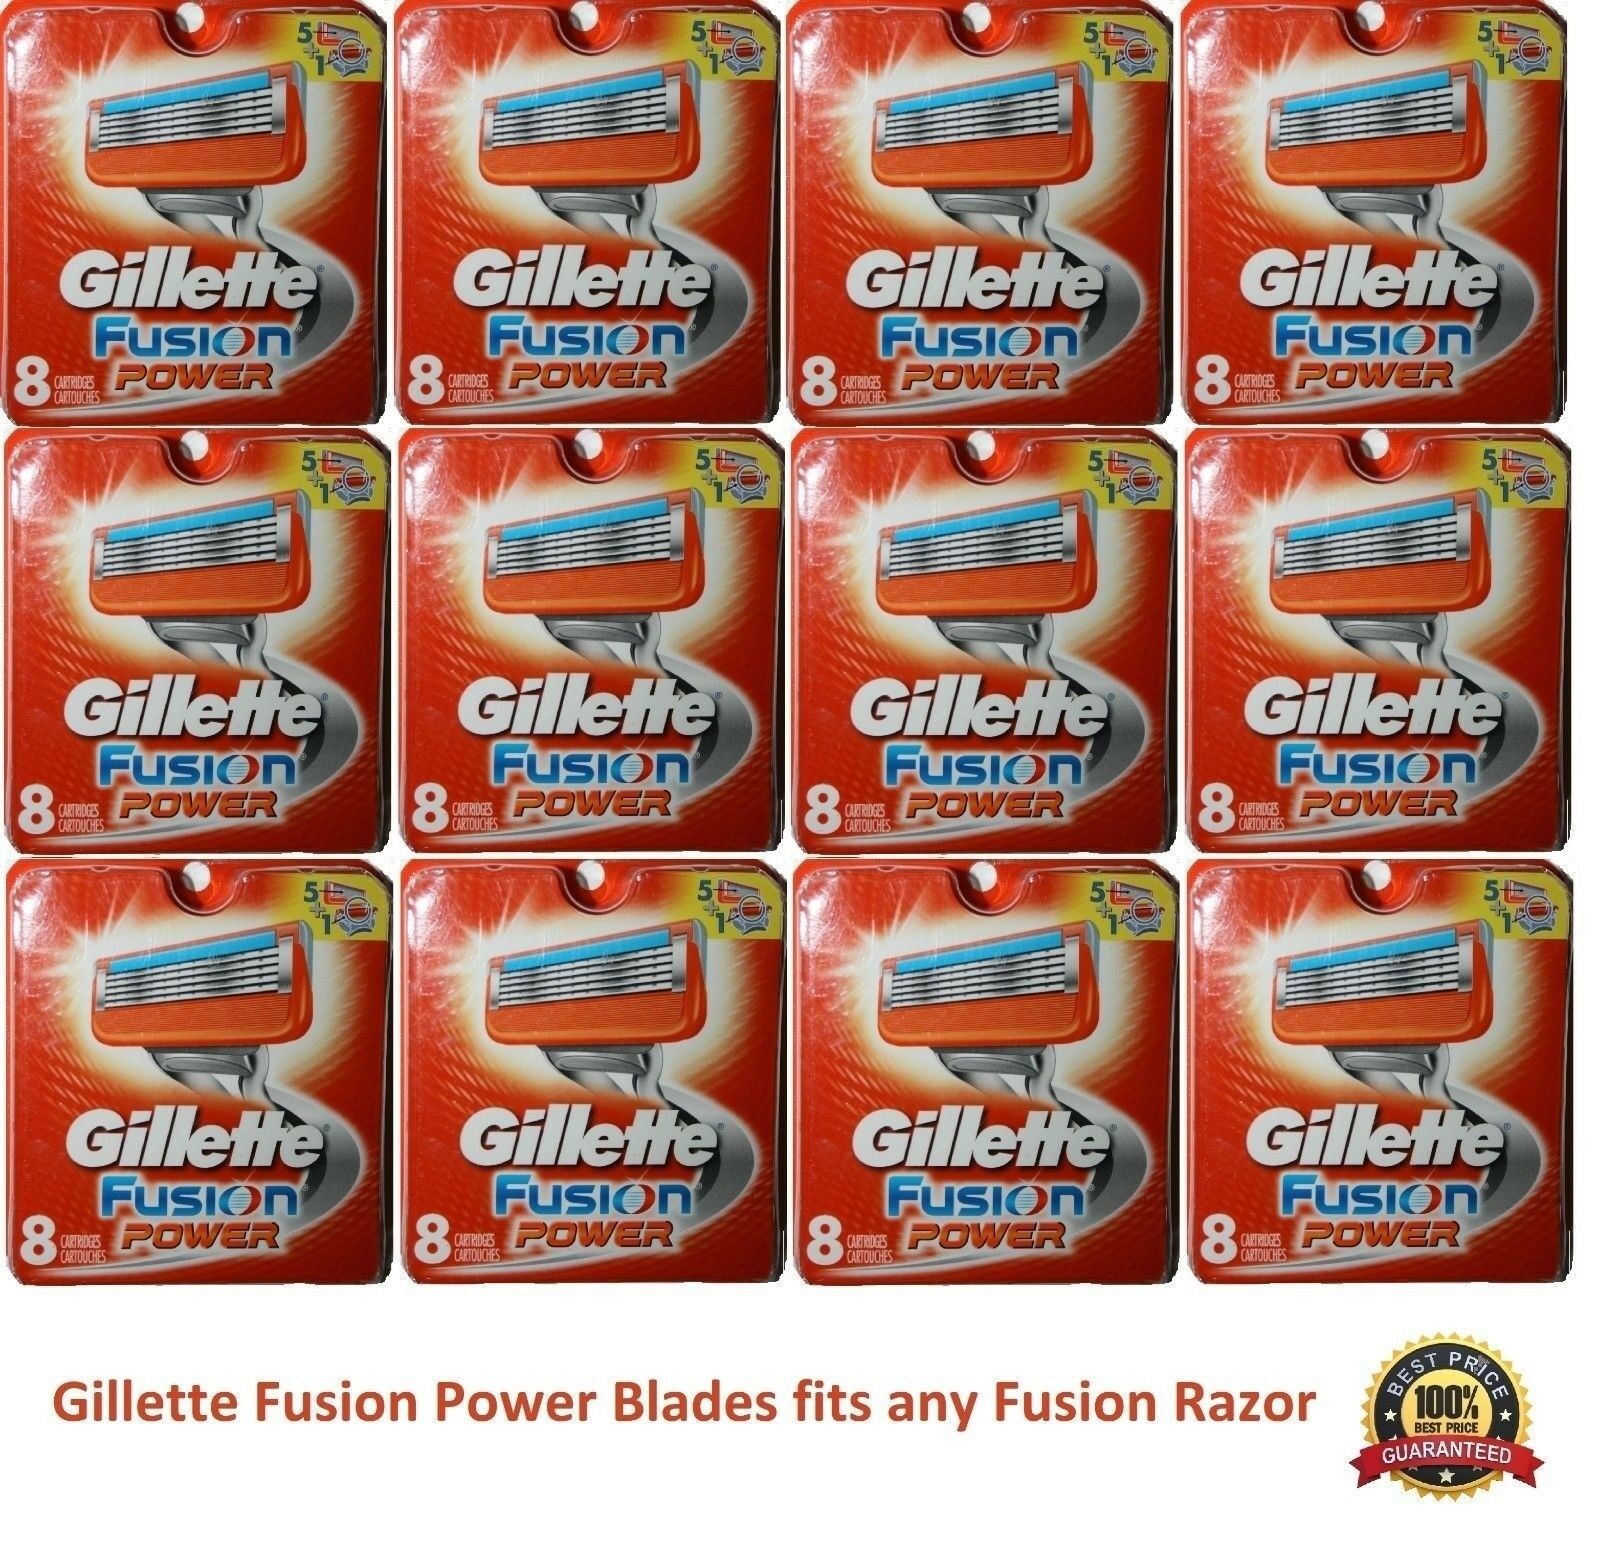 Gillette Fusion 5 Power Razor Blades Refills Cartridges Shaver 100% Authentic Us